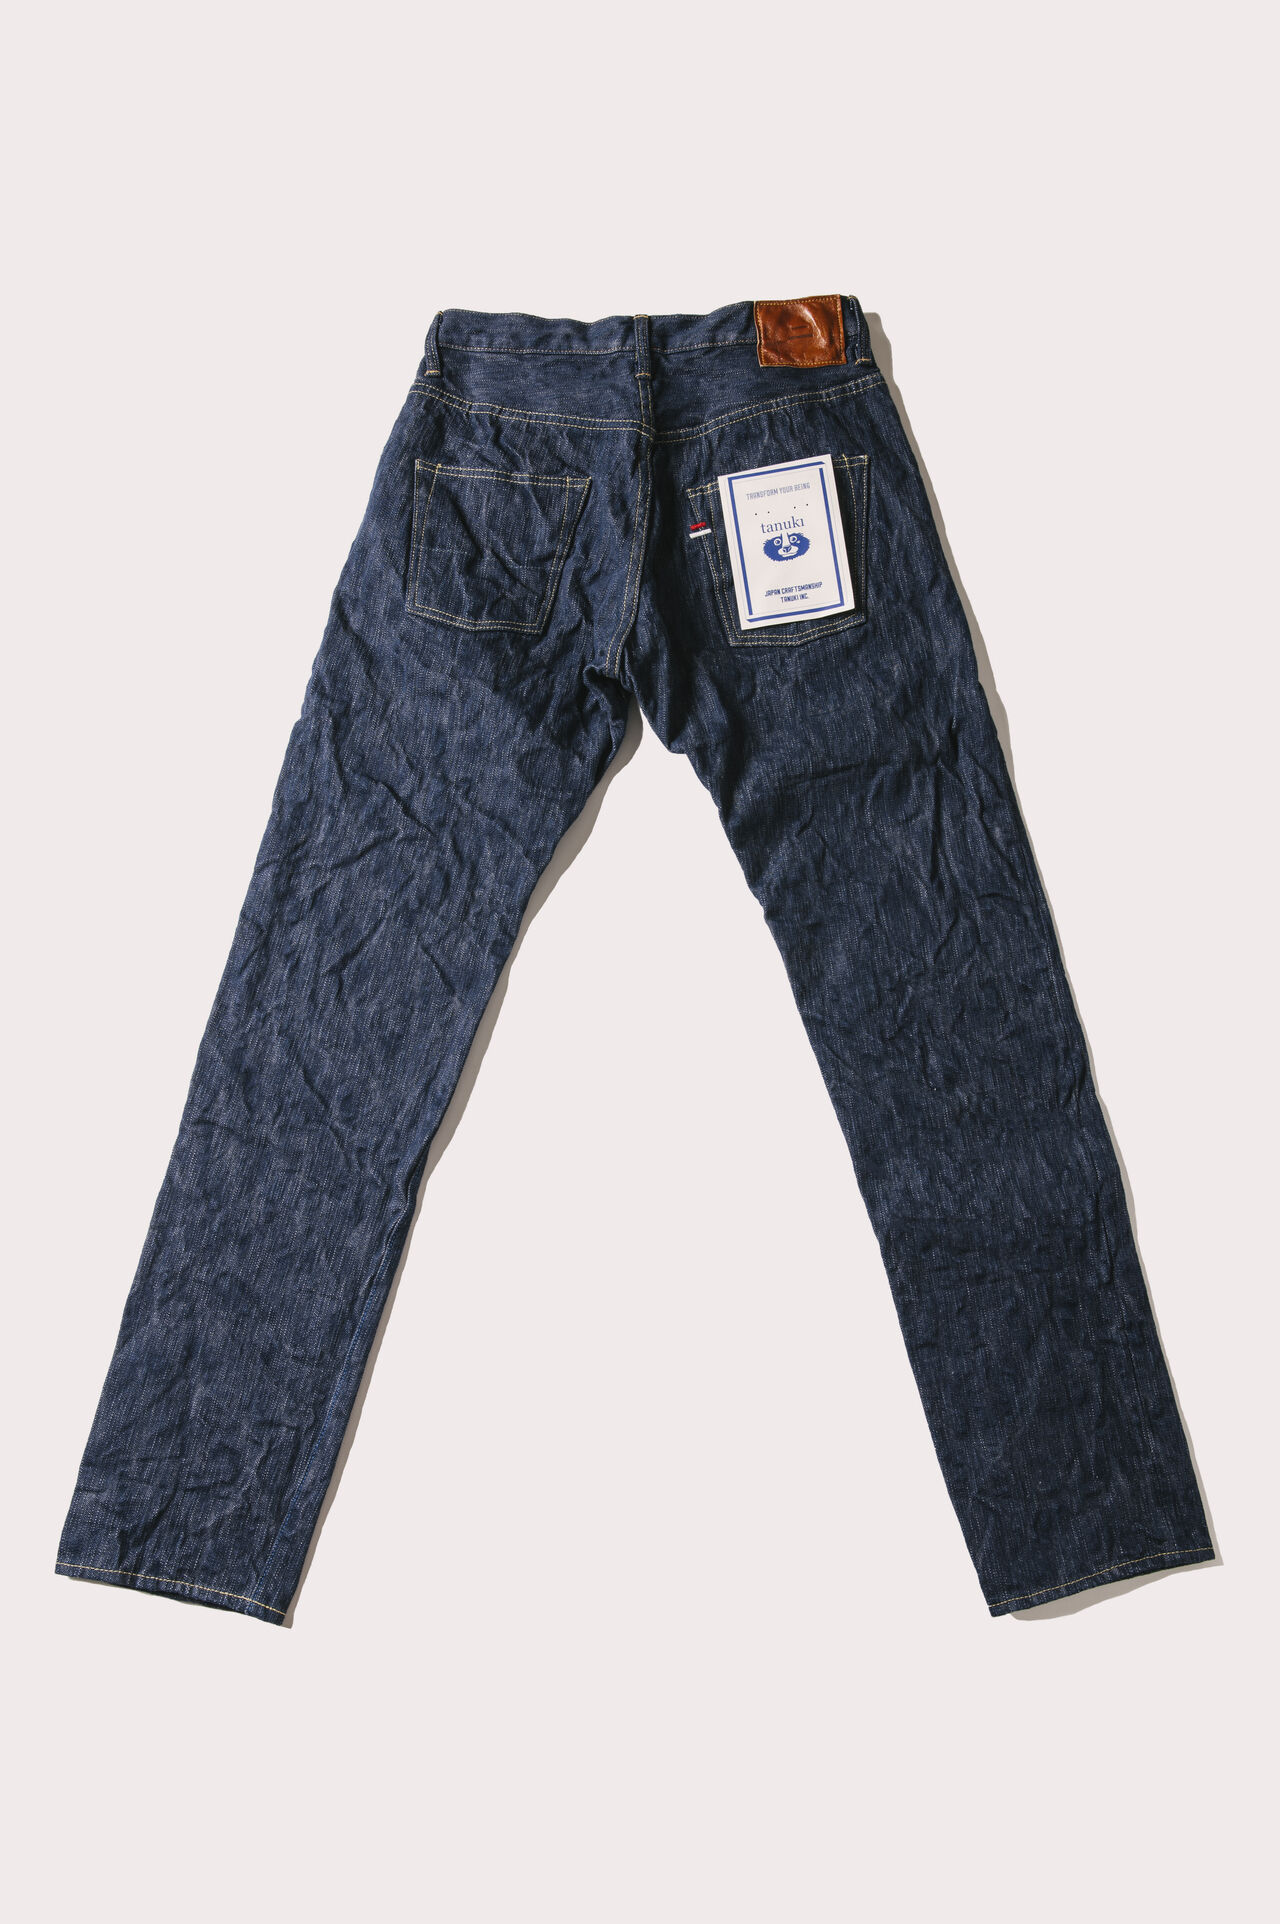 AHT 18oz Shoai "Arashi" High Tapered Jeans,, large image number 6